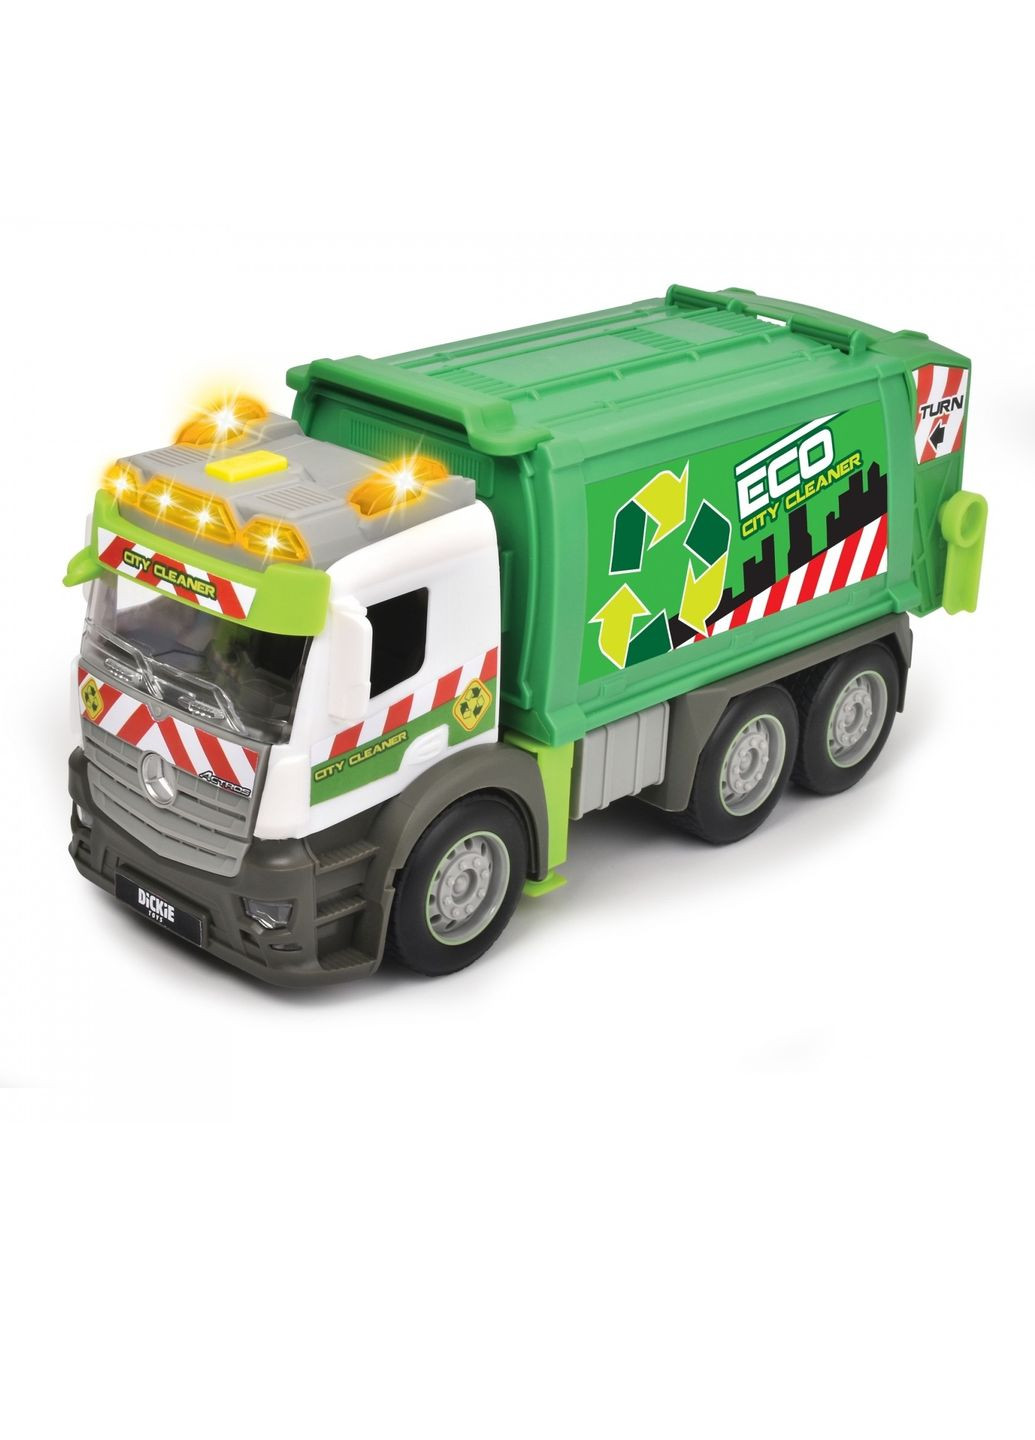 Вантажівка - Сміттєвоз Dickie toys (275393035)